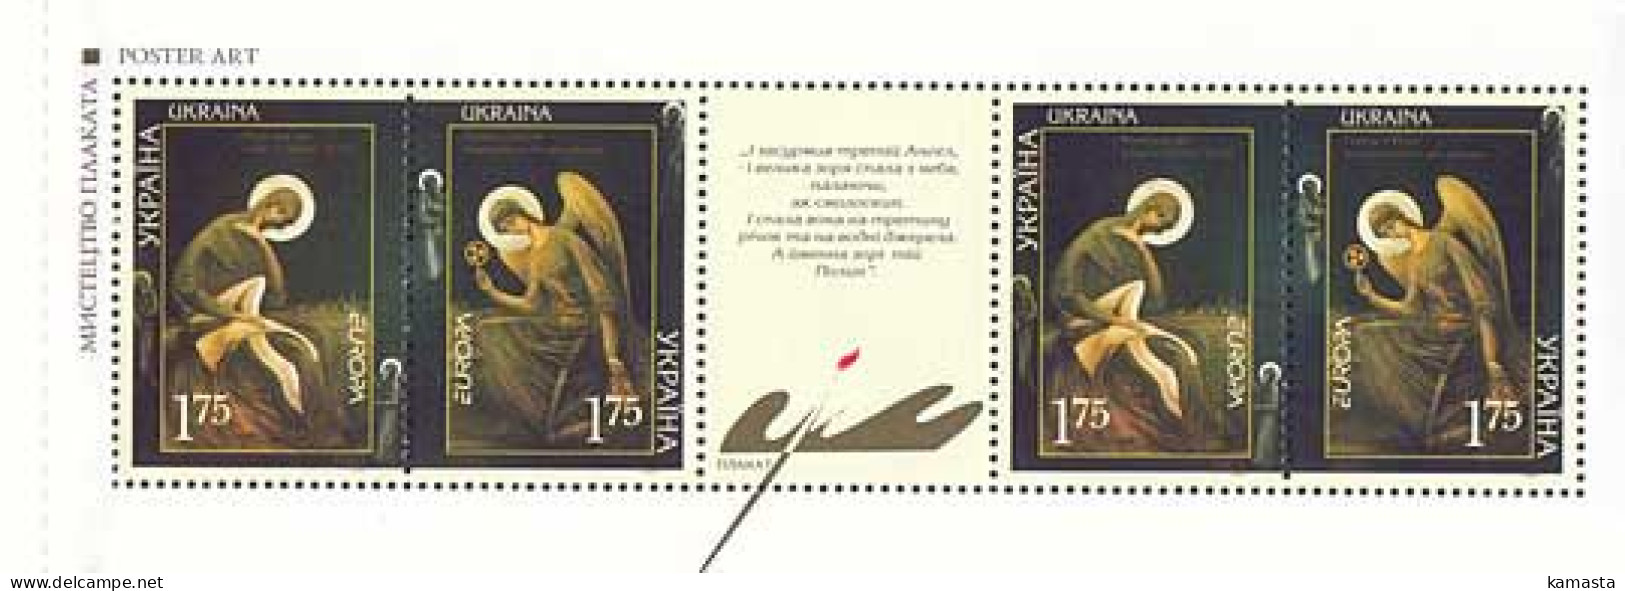 Ukraine  2003 Europa. Poster Art. Booklet. Mi 562-3 - 2003